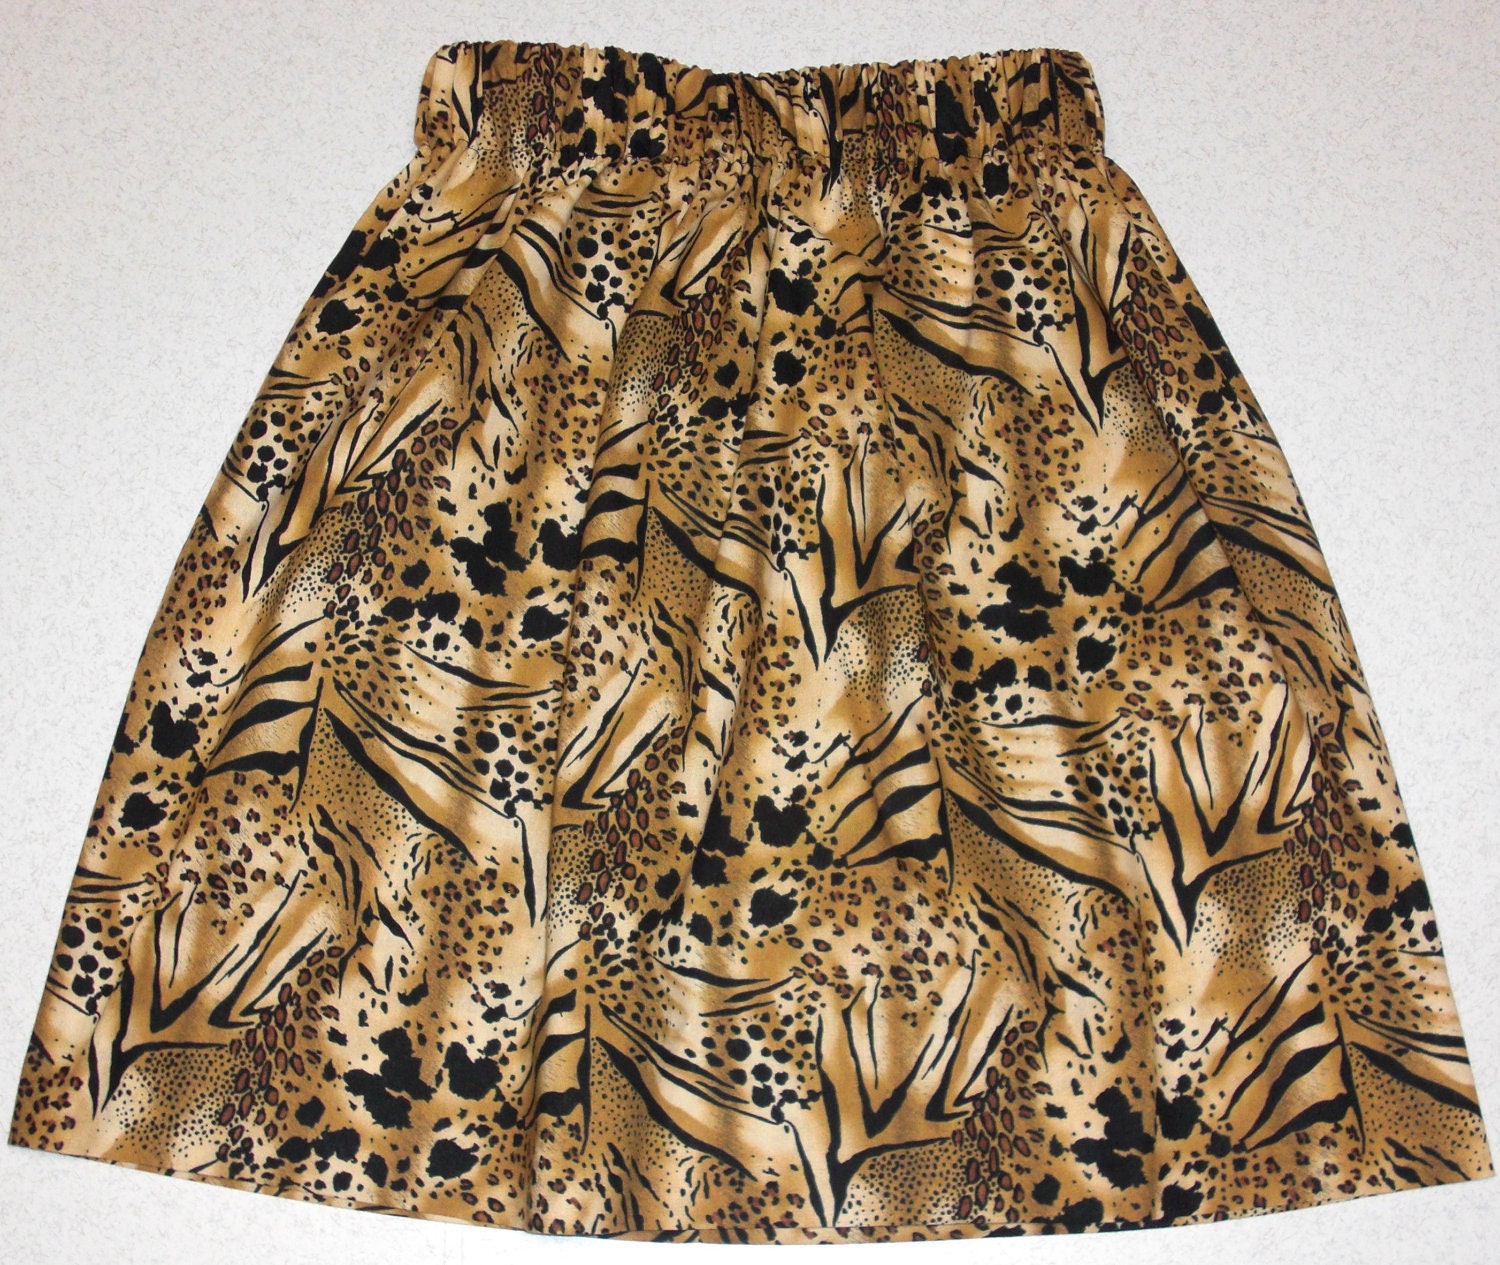 Tiger Print Skirt - Etsy